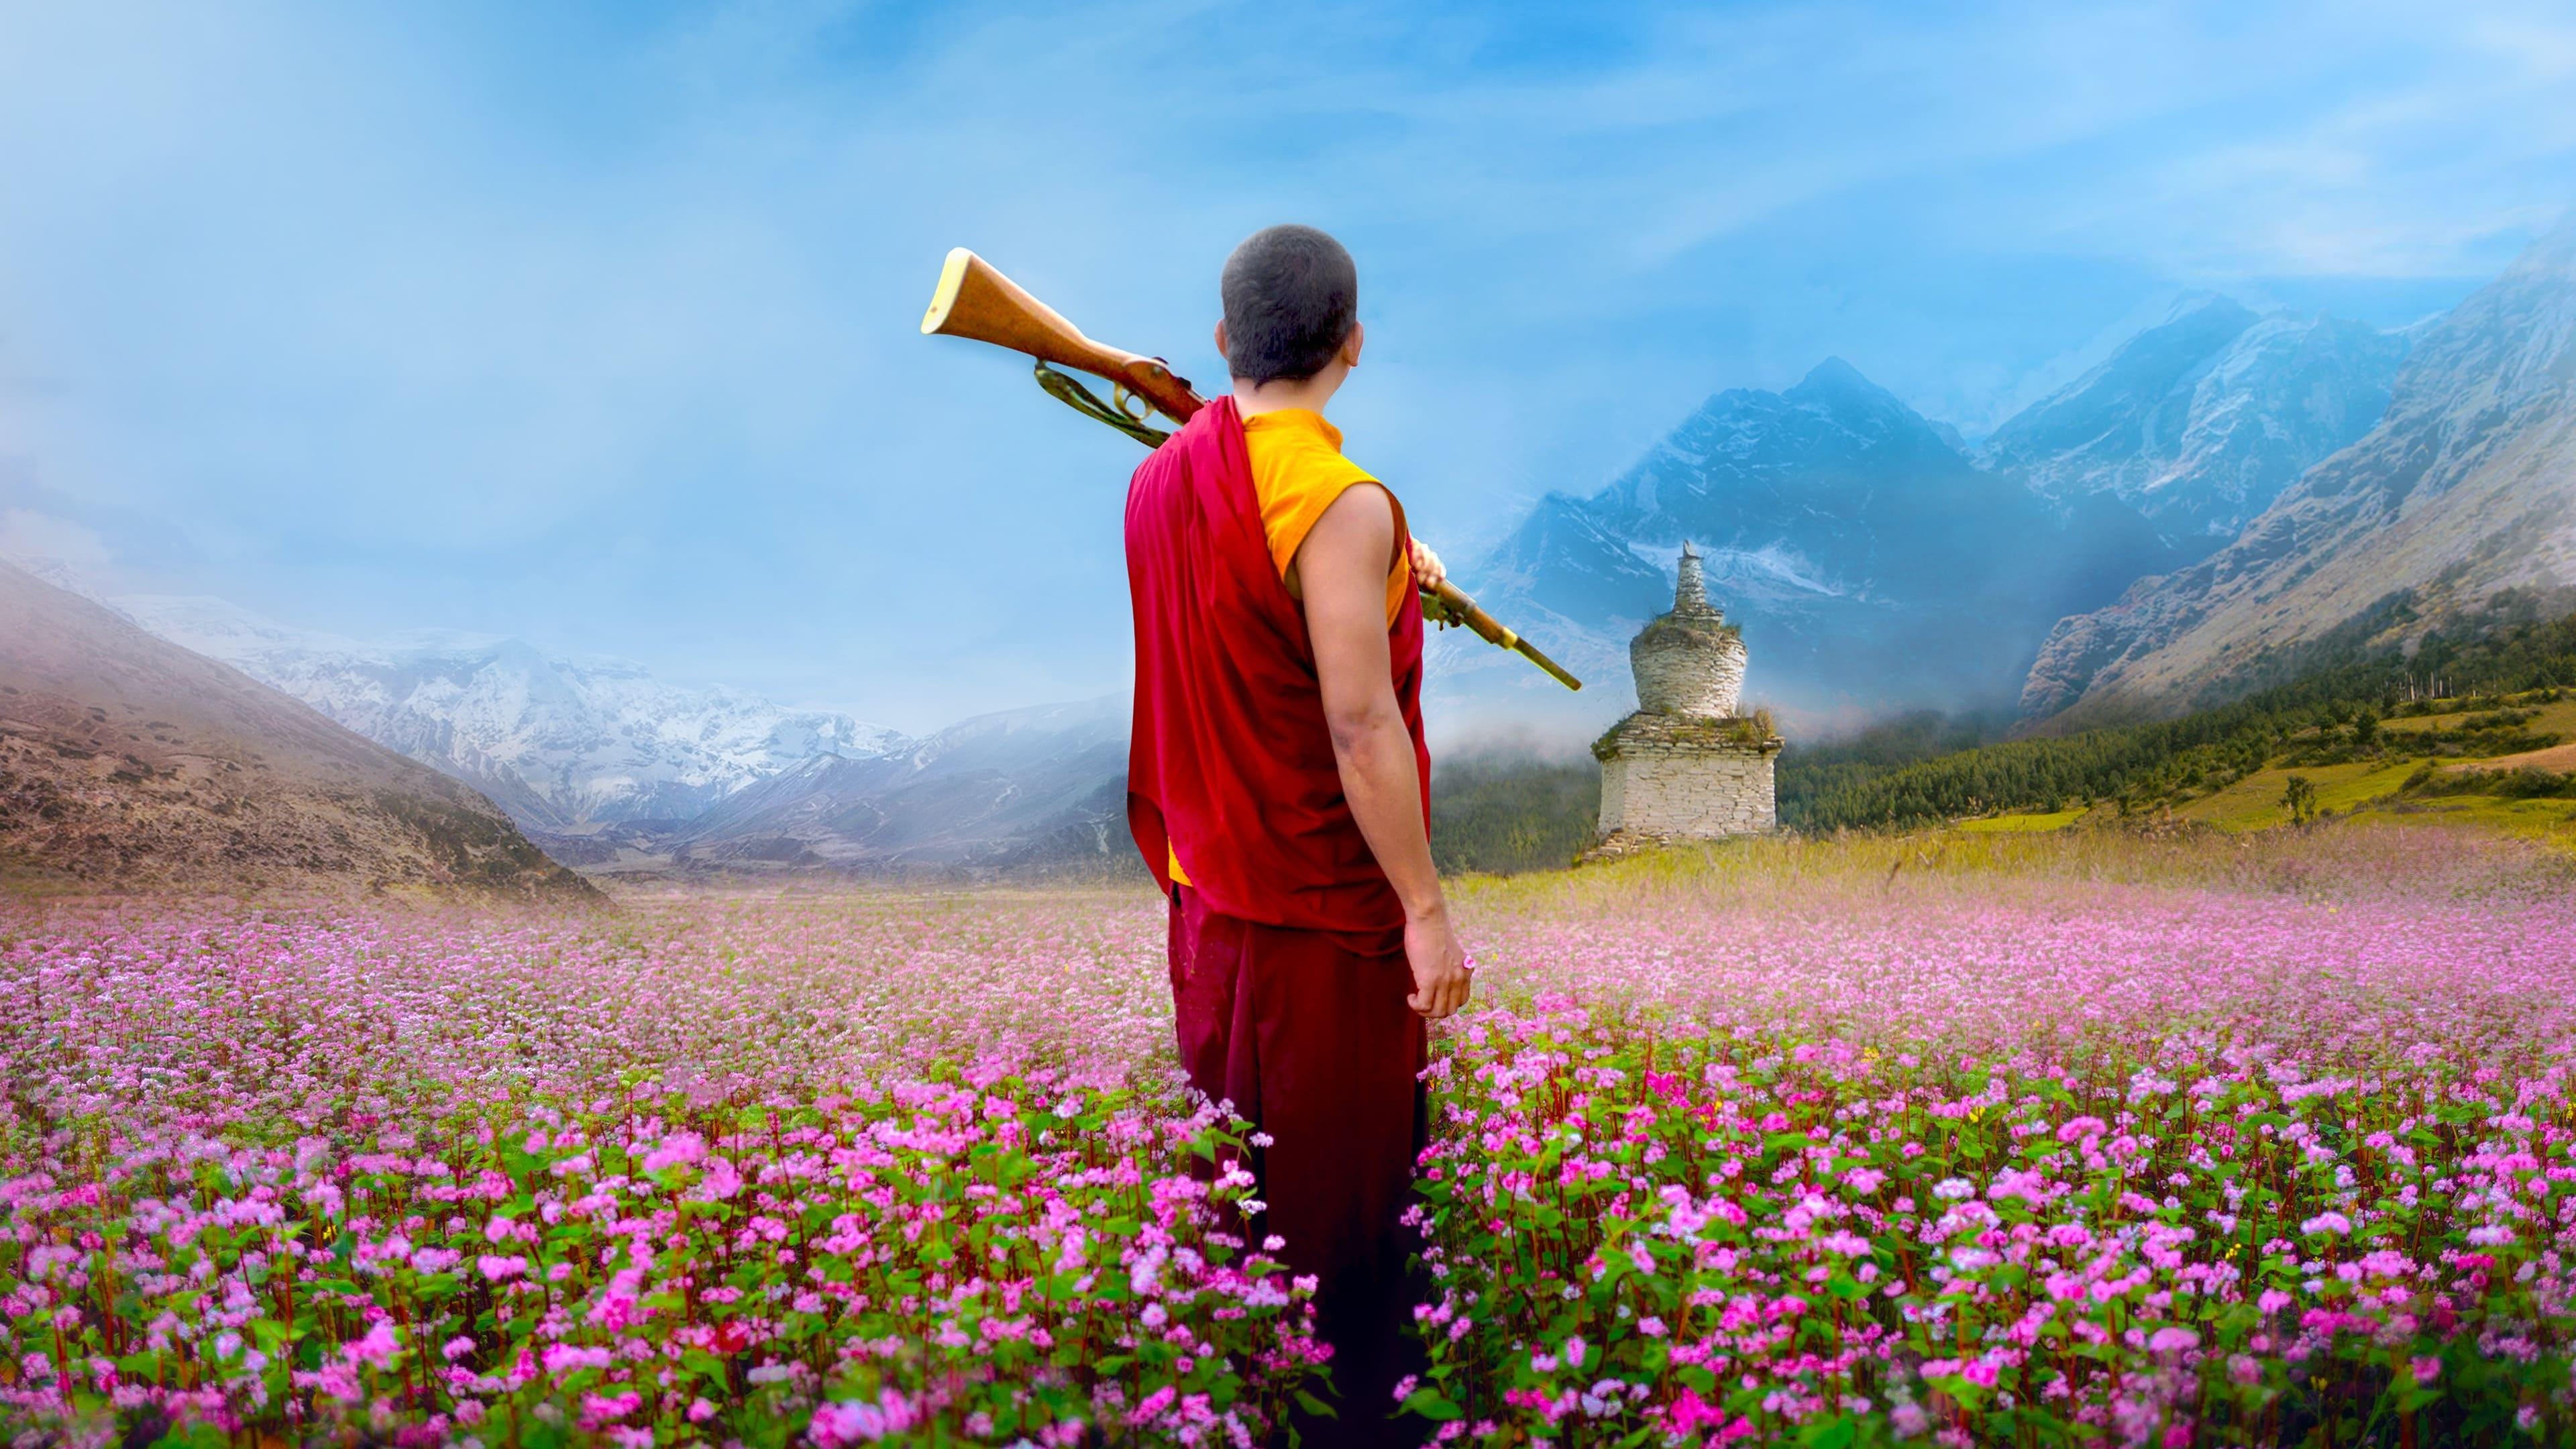 Deki Lhamo backdrop